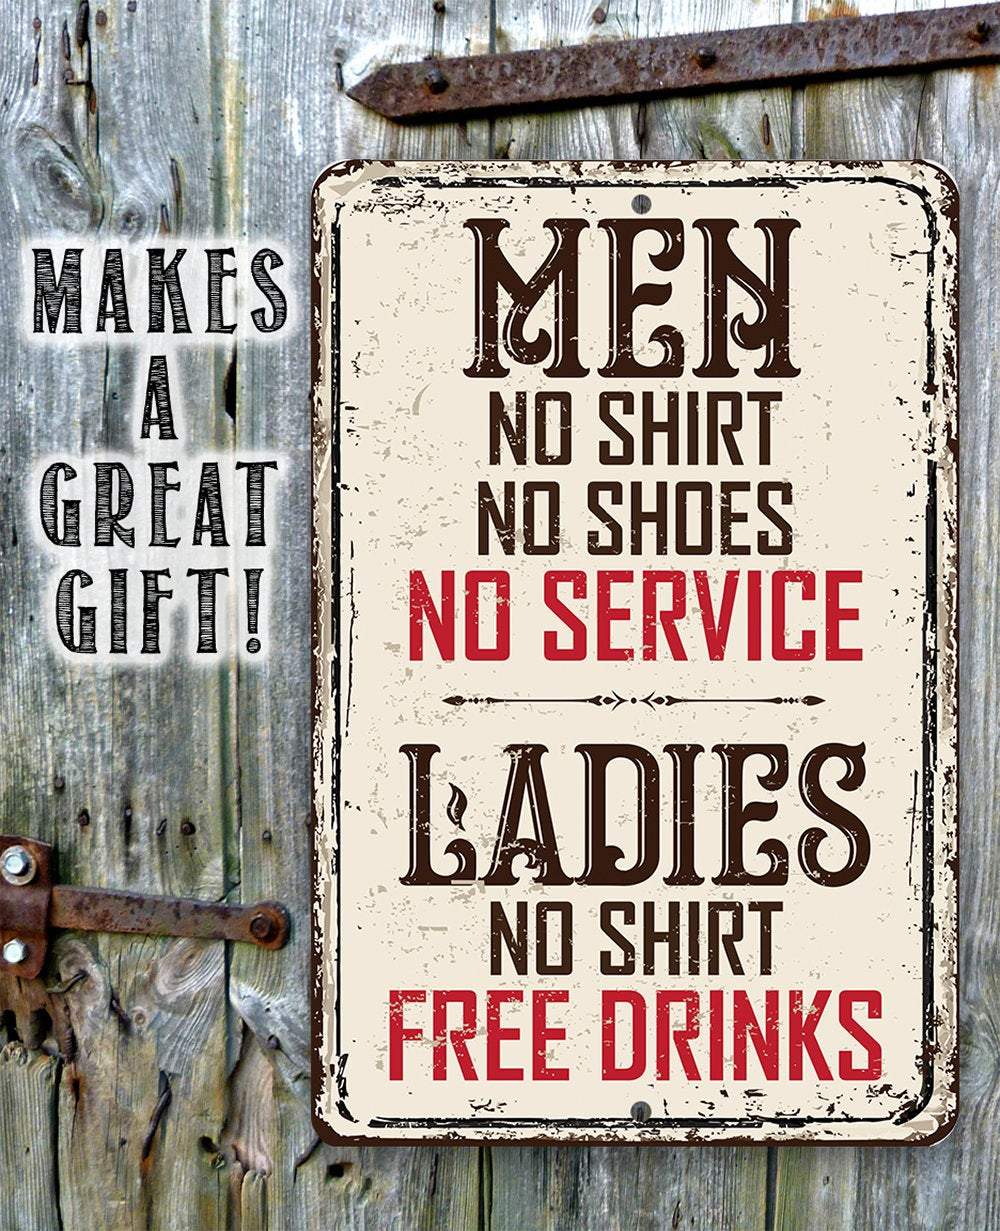 Men No Service, Ladies Free Drinks - Metal Sign | Lone Star Art.